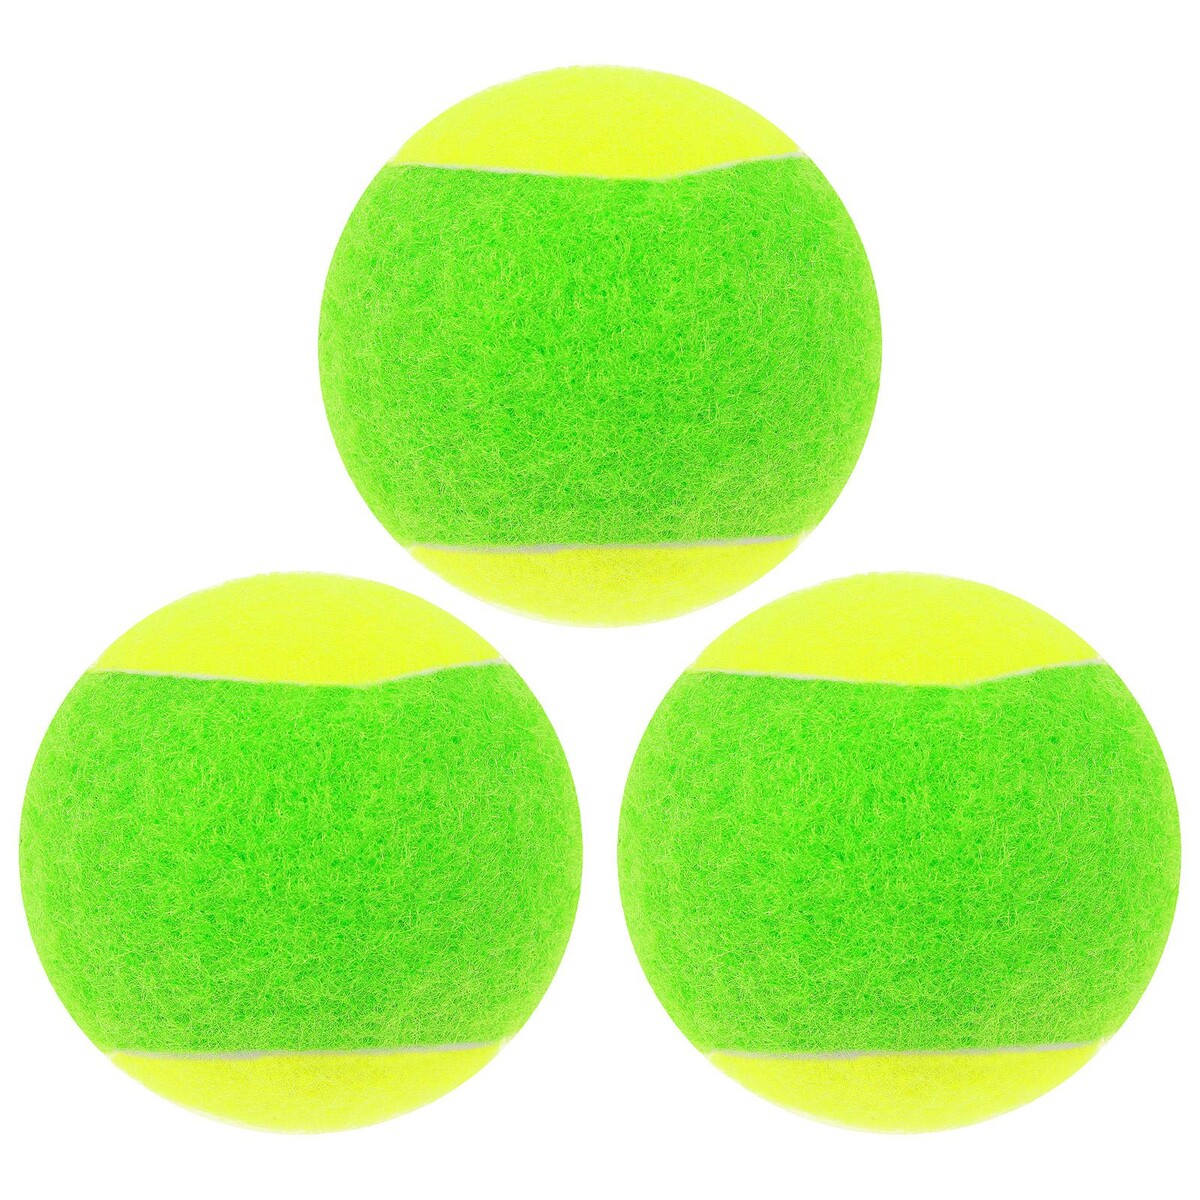 Набор мячей для большого тенниса onlytop swidon, 3 шт. мячи для большого тенниса swidon 929 3 штуки в пакете e29376